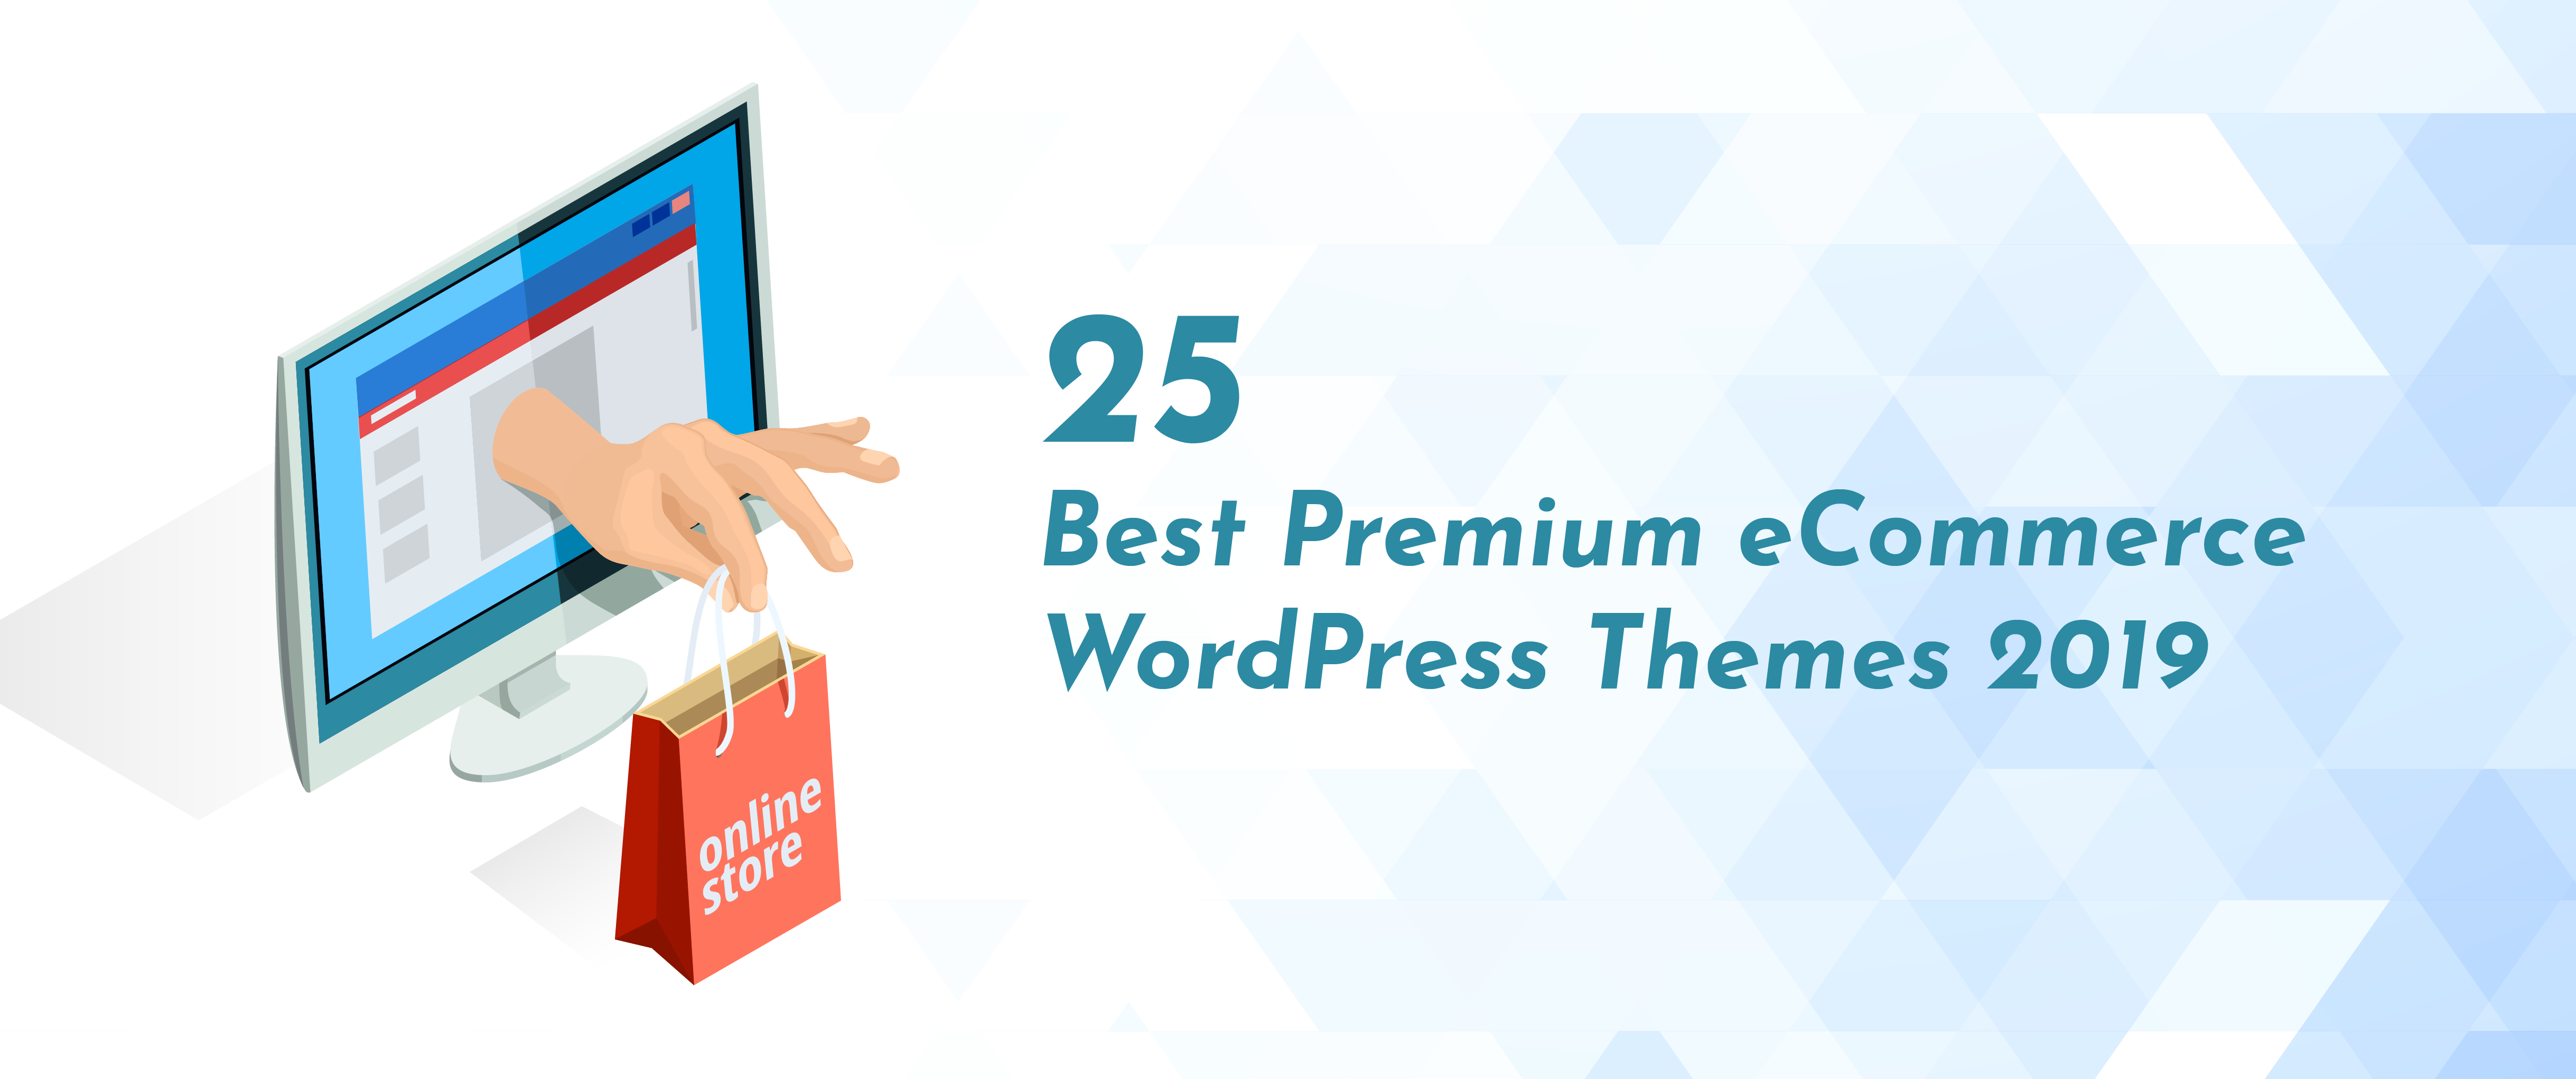 25 Best Premium eCommerce WordPress Themes 2019